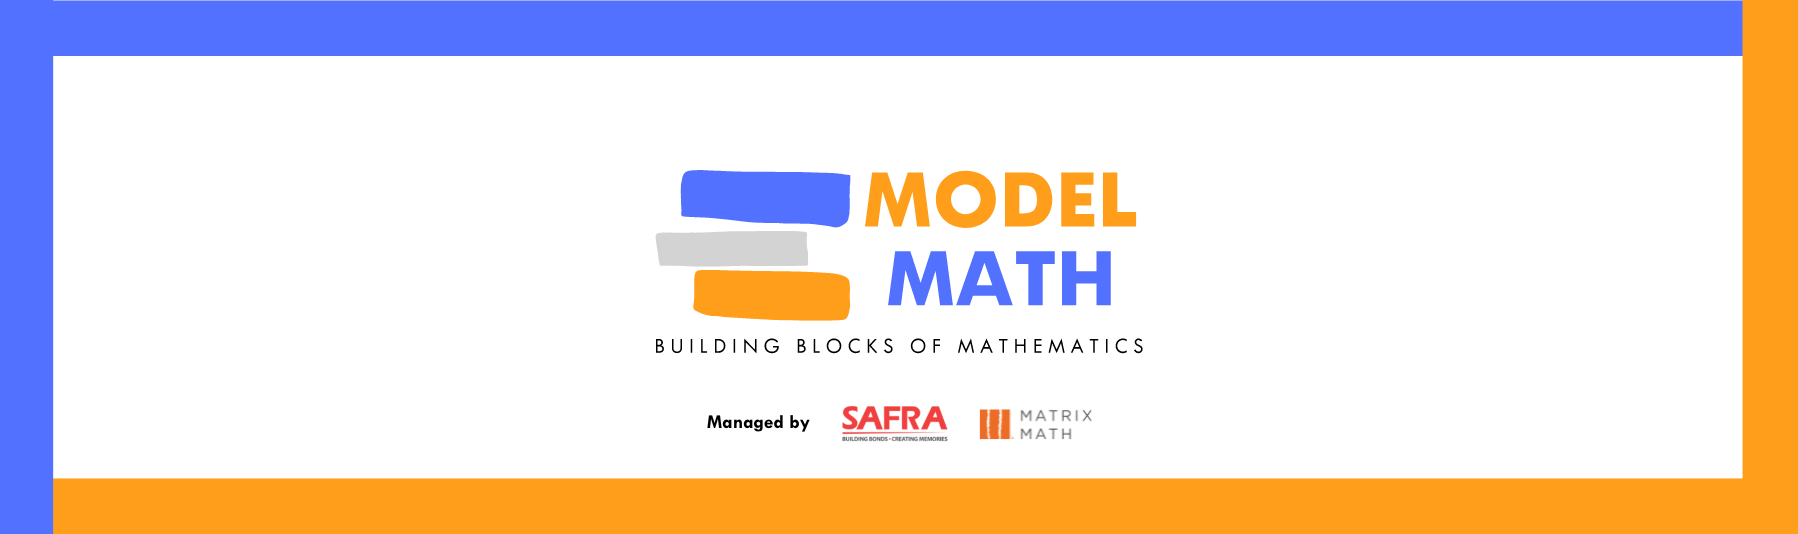 Model math website header